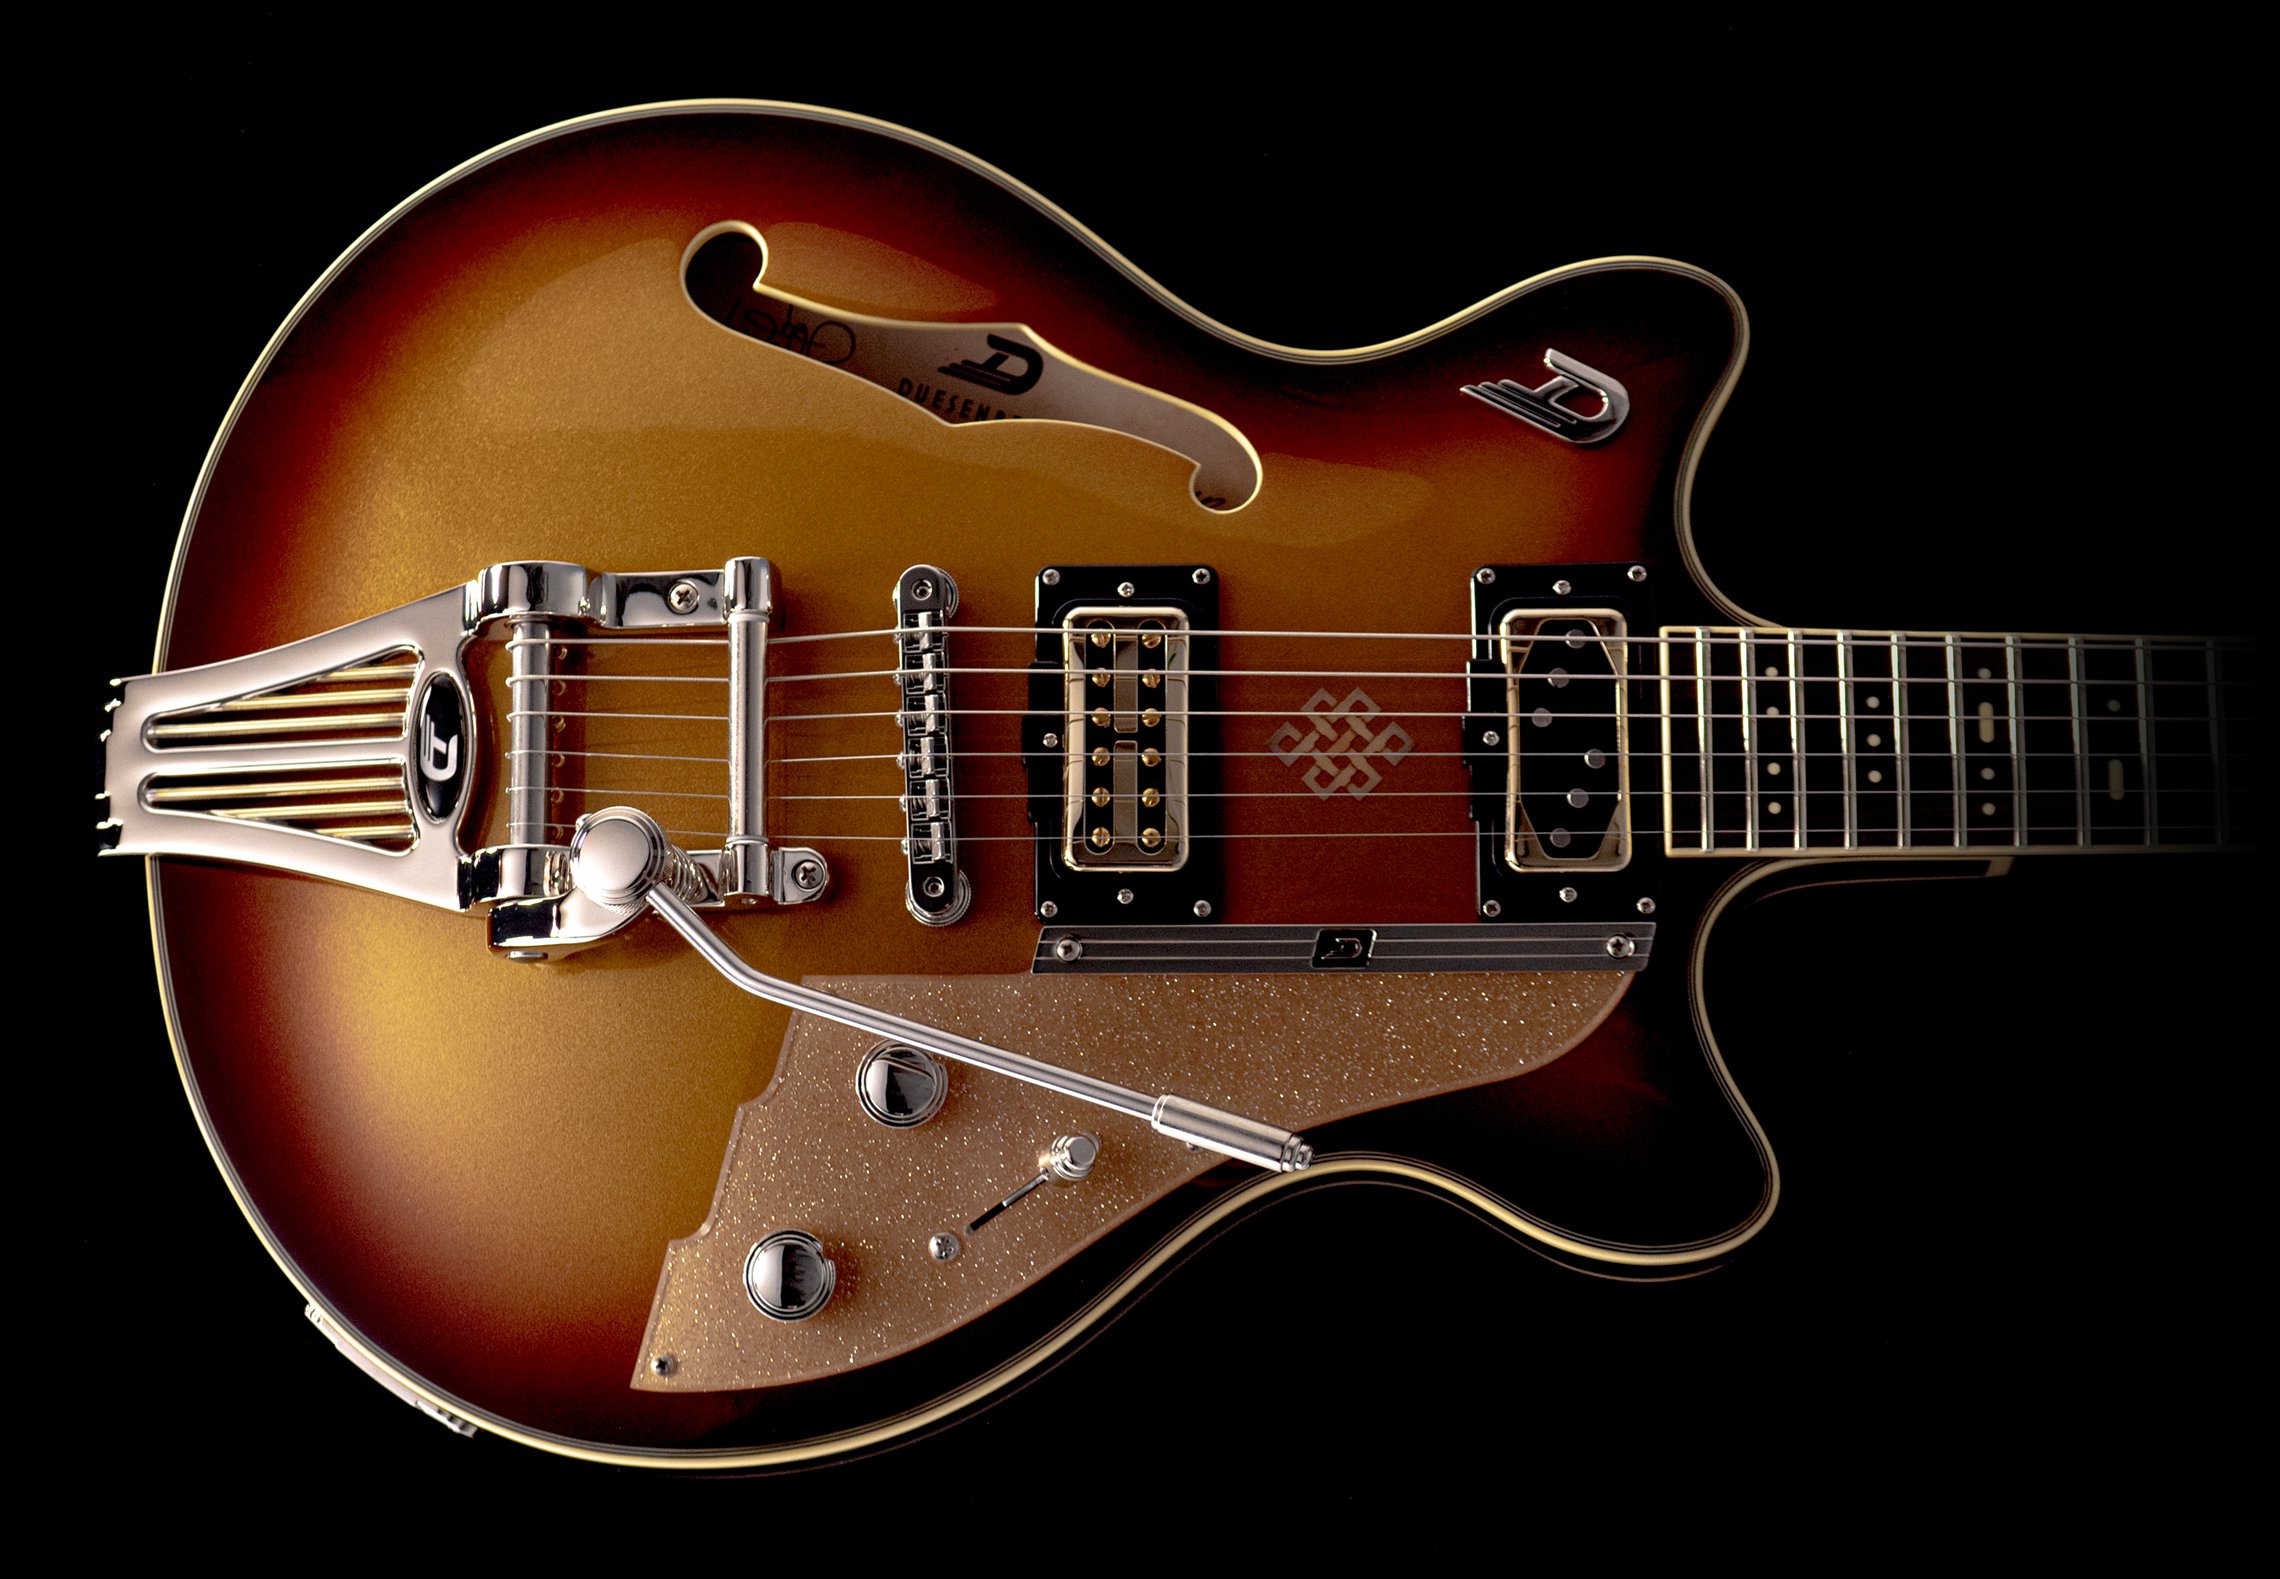 : Dusenberg UK Seller Guitar Miniature Replica The Eagles Axman Joe Walsh 